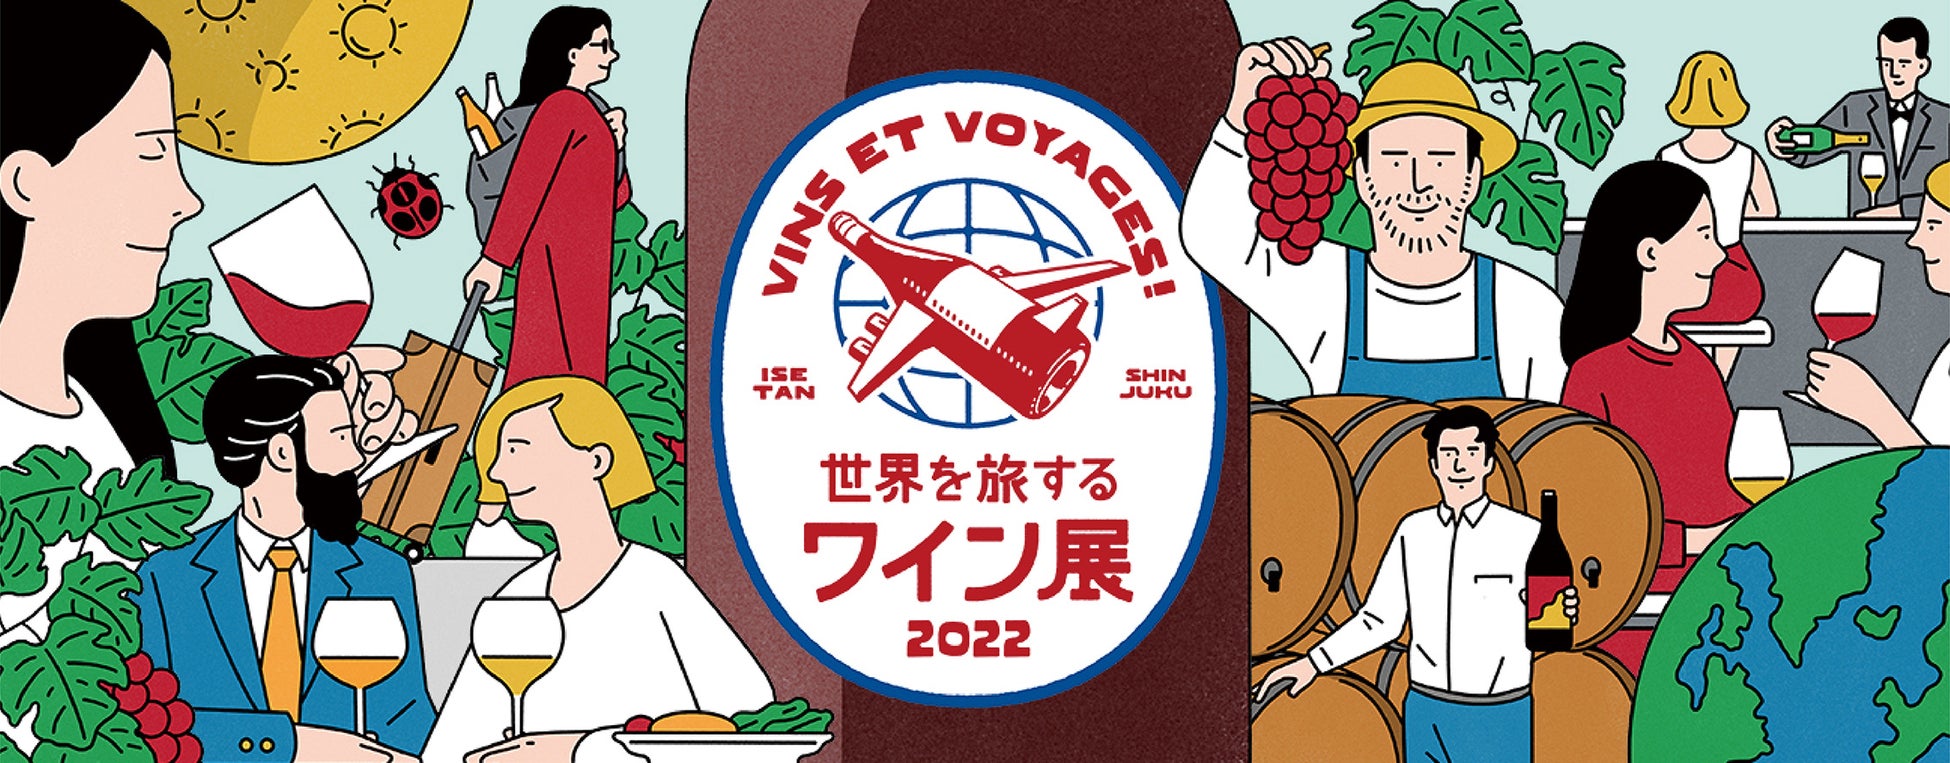 wa-syu OFFICIAL ONLINE SHOP初出展！「Vins et voyages！世界を旅するワイン展2022 」この夏、飲むよろこび、出会うたのしみを。